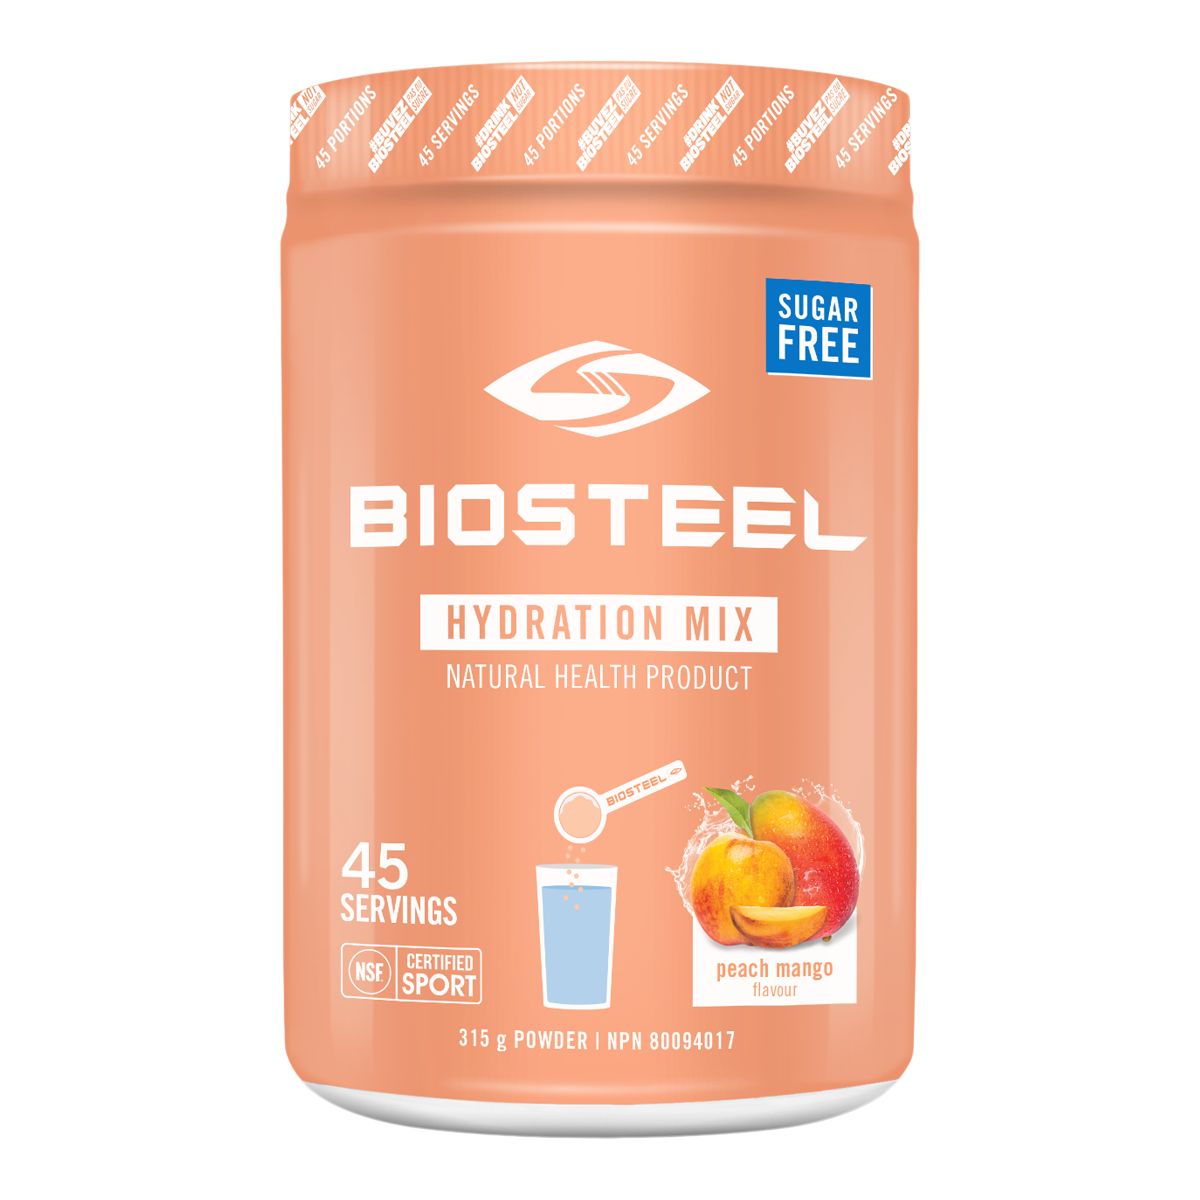 BioSteel High Performance Sports Mix (12 x Packets) + FREE BIOSTEEL TEAM  BOTTLE! 